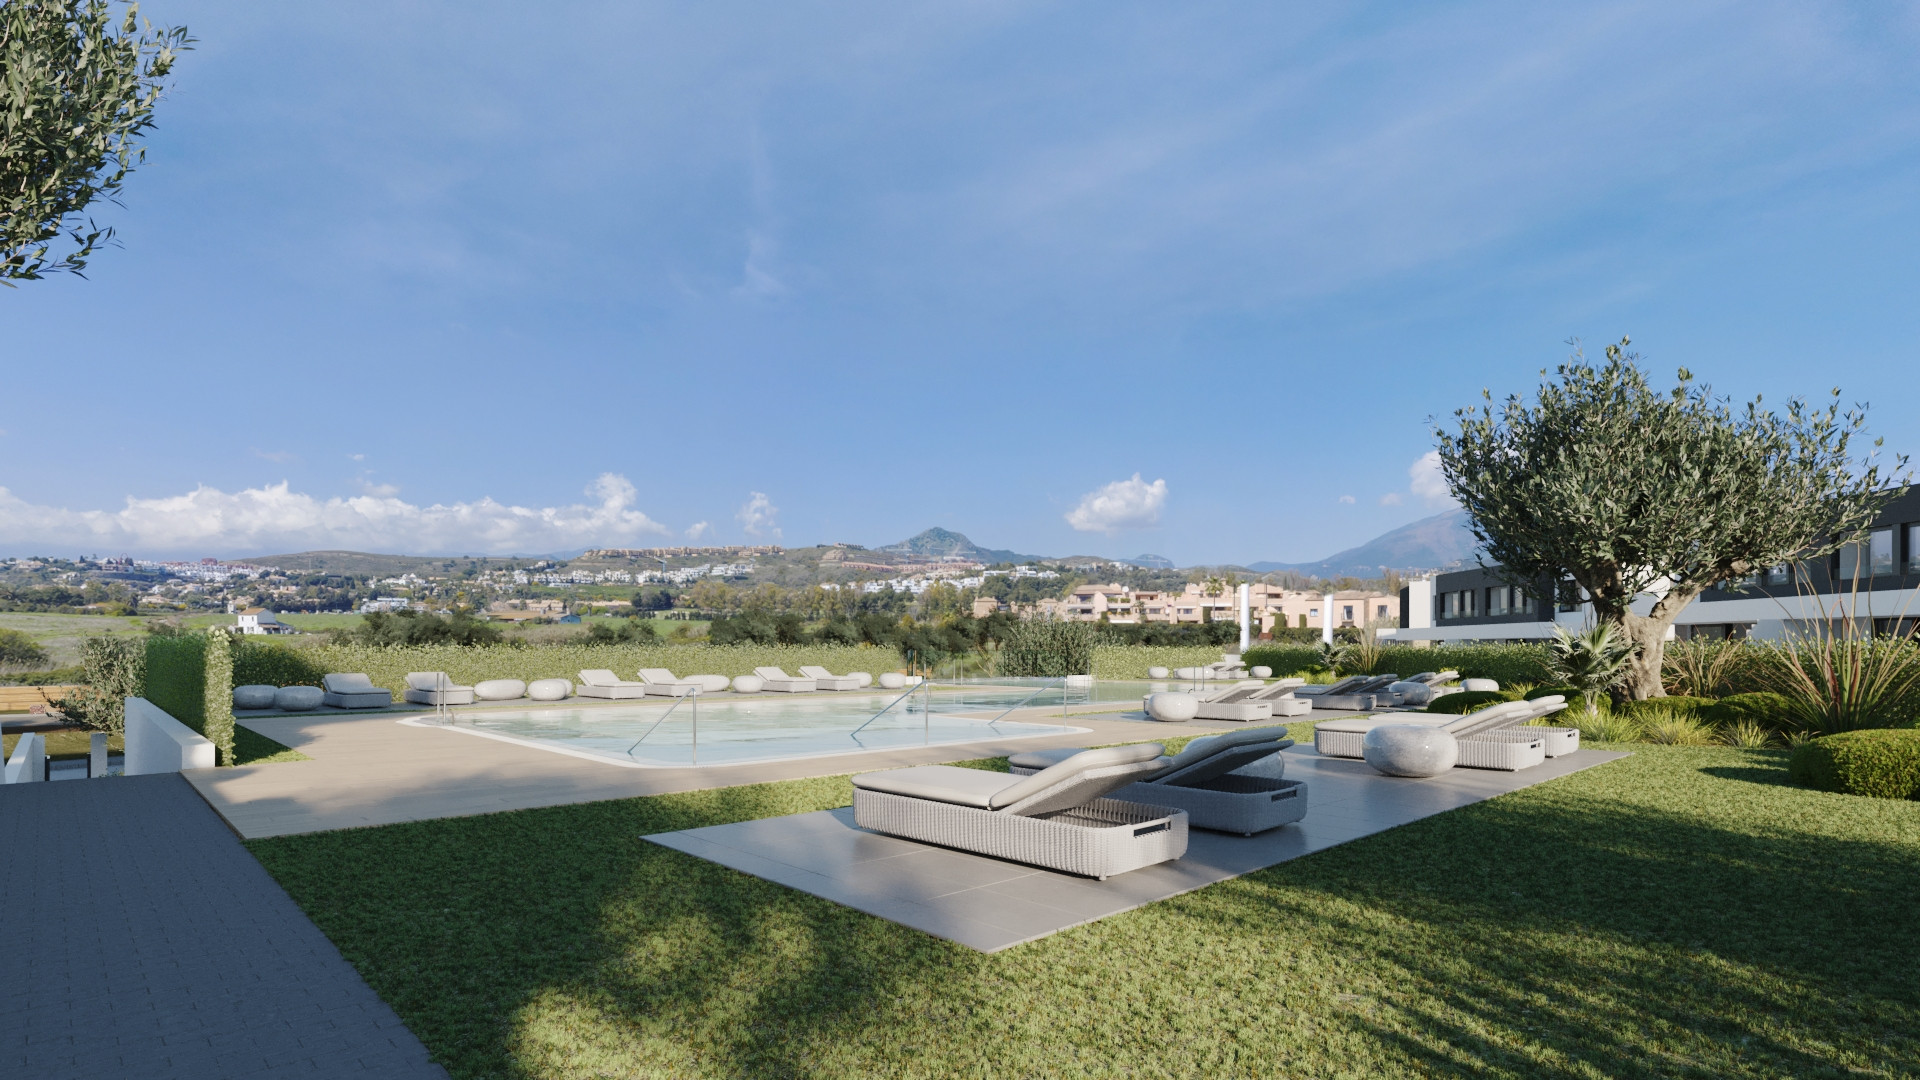 New complex of  50 semi-detached villas next to Atalaya Golf